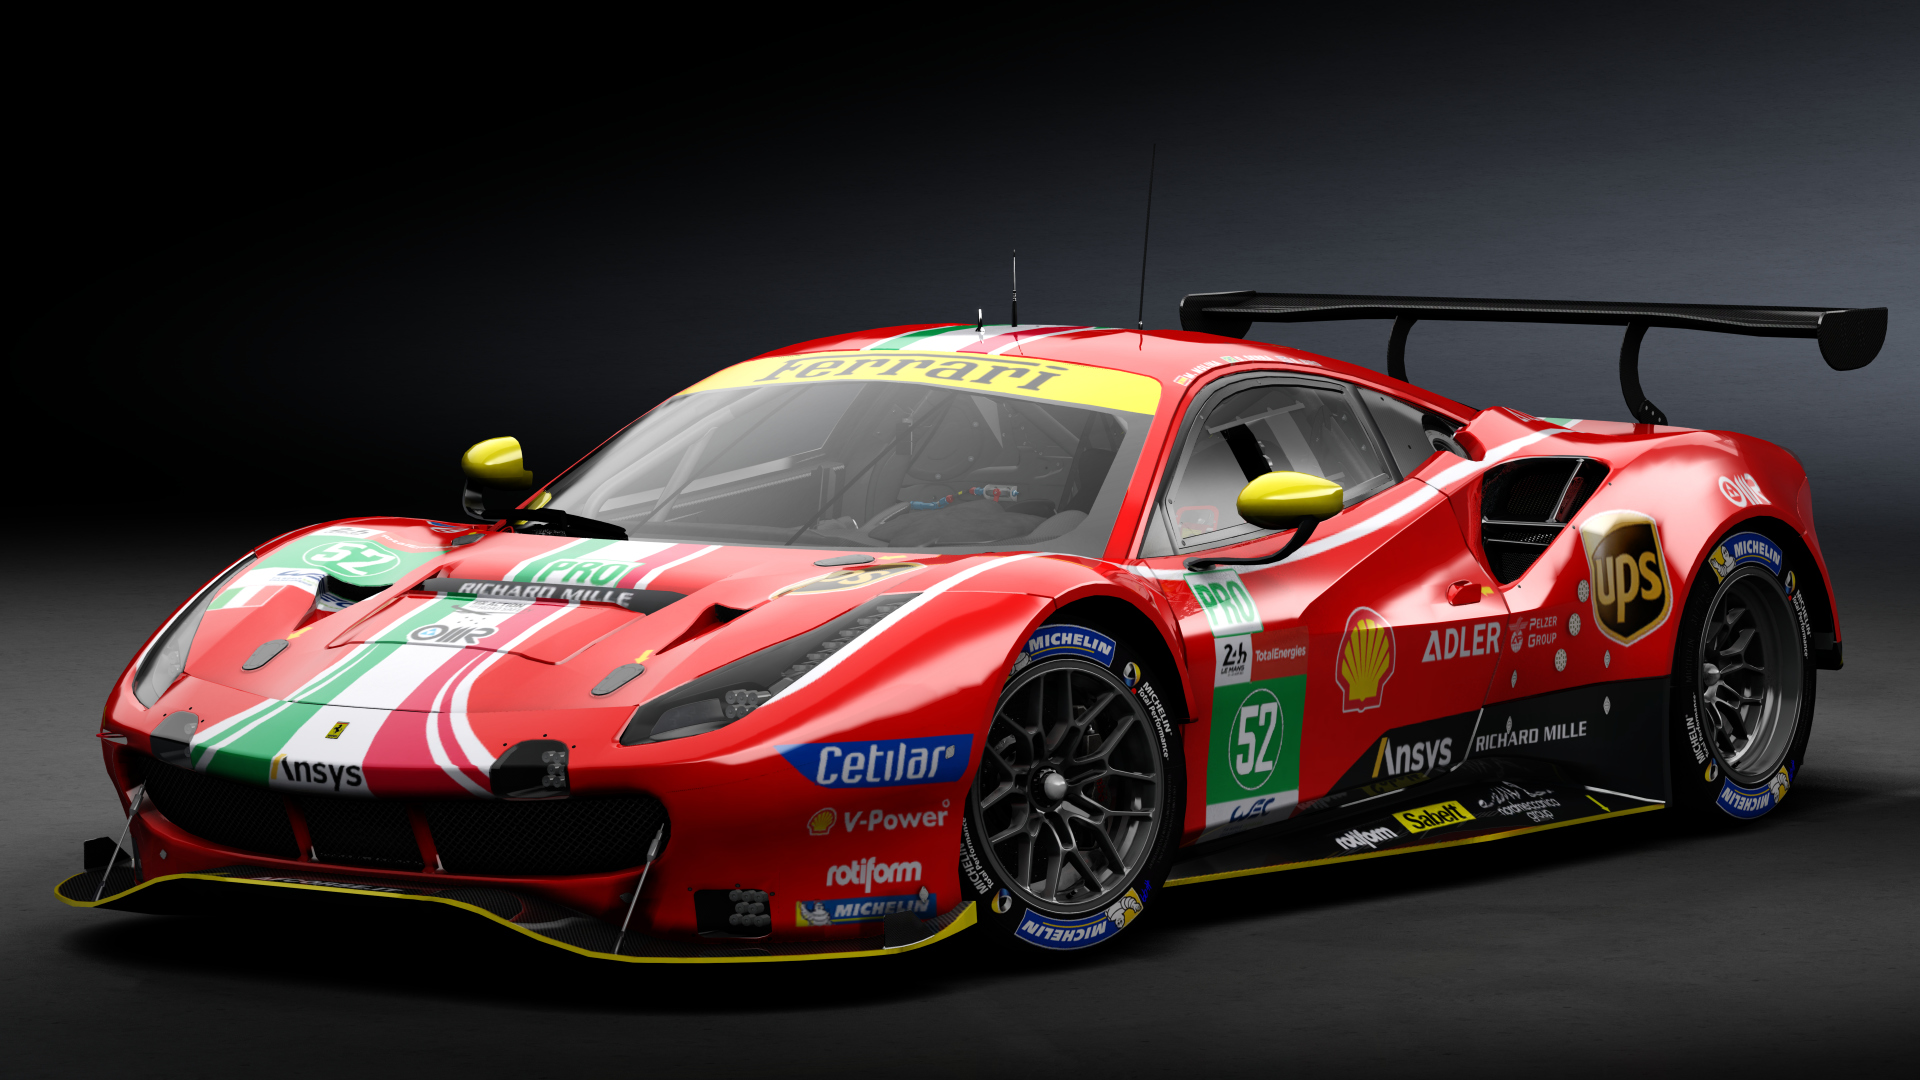 2018 Ferrari 488 GTE Evo Le Mans Spec [Michelotto], skin 2021 #52 AF Corse LM24